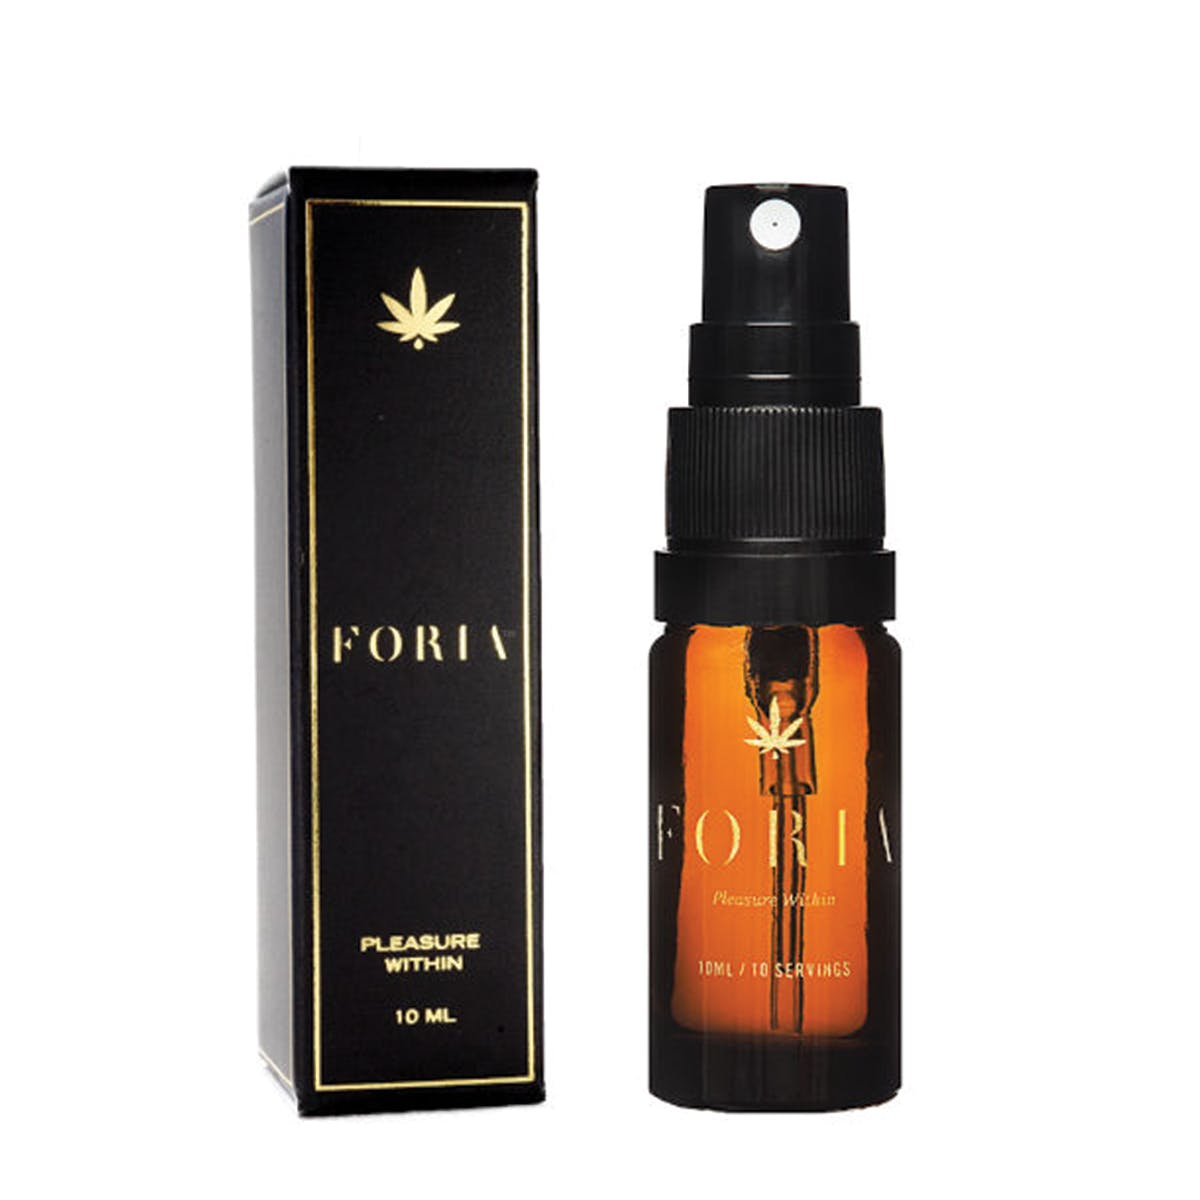 marijuana-dispensaries-starbuds-nw-denver-in-denver-foria-pleasure-10ml-spray-bottle